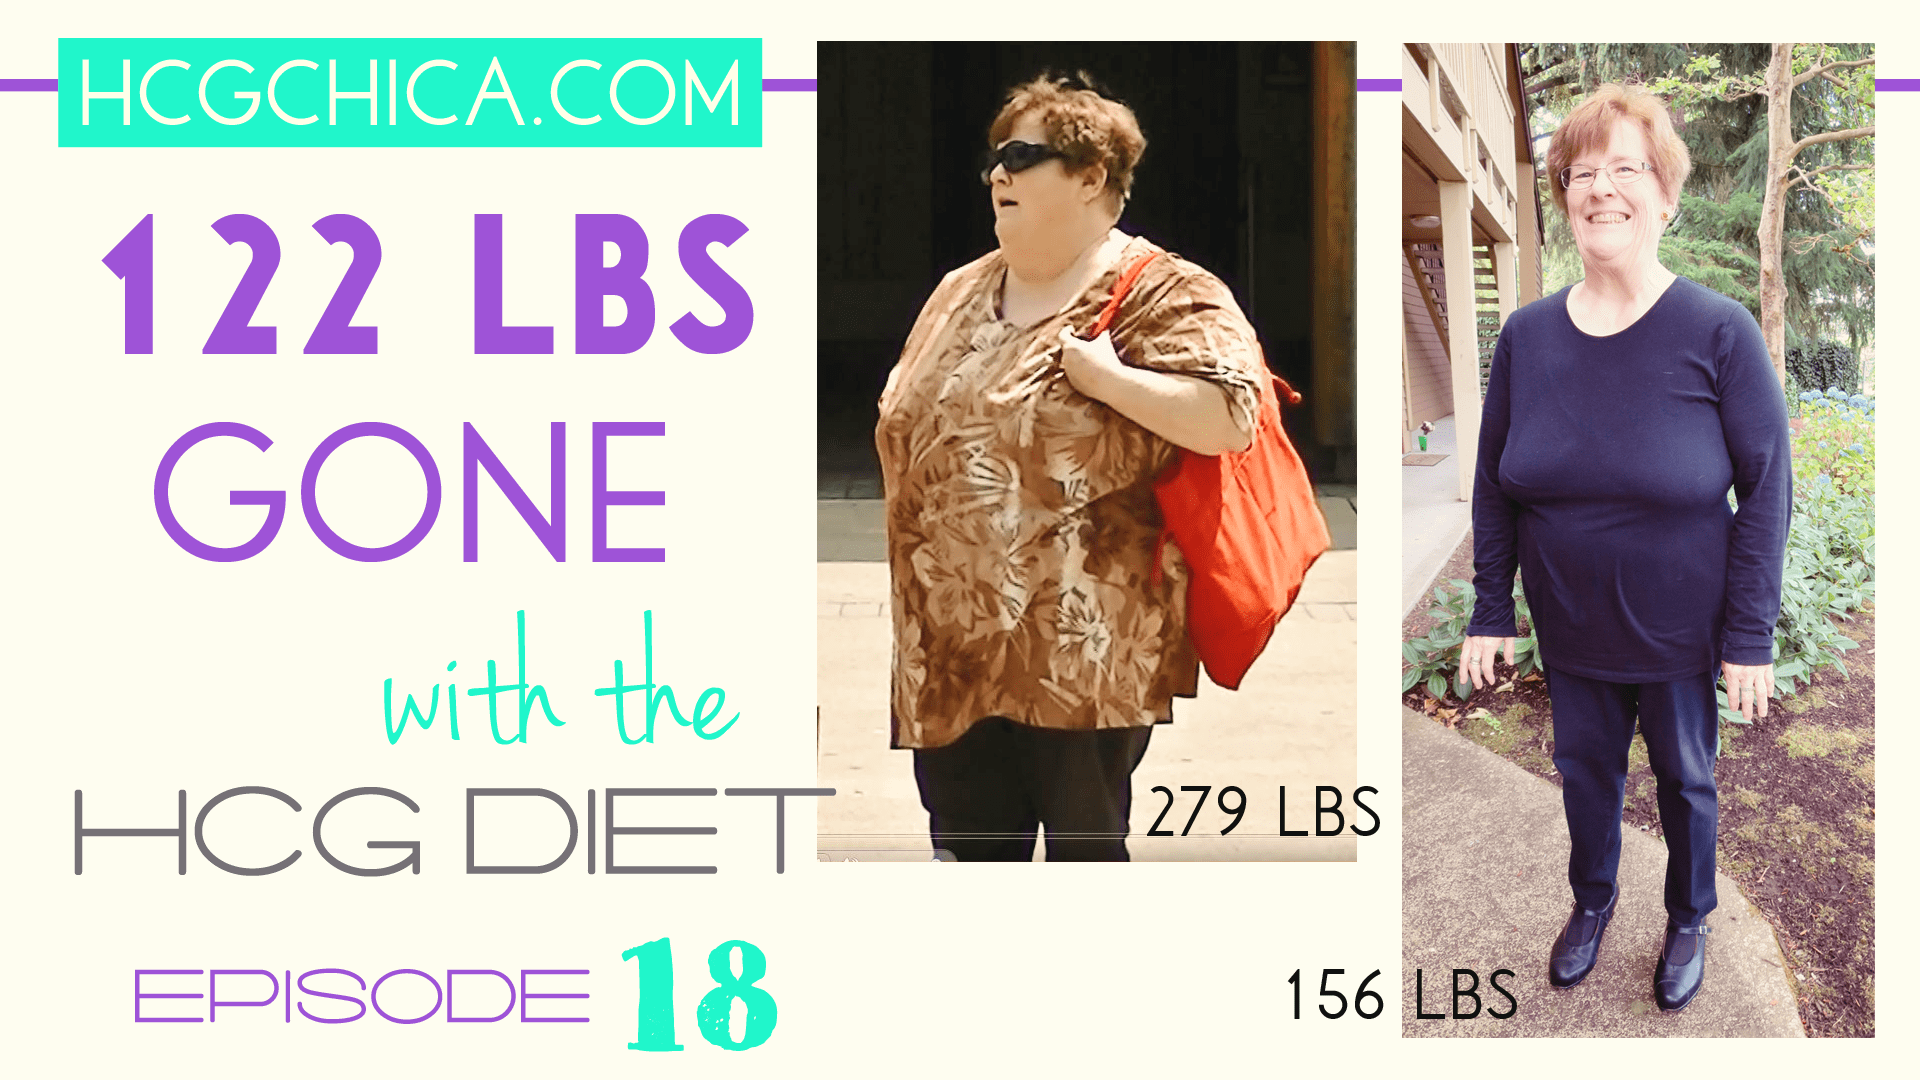 hCG Diet Interviews - Episode 18 - 122 lbs Lost - hcgchica.com